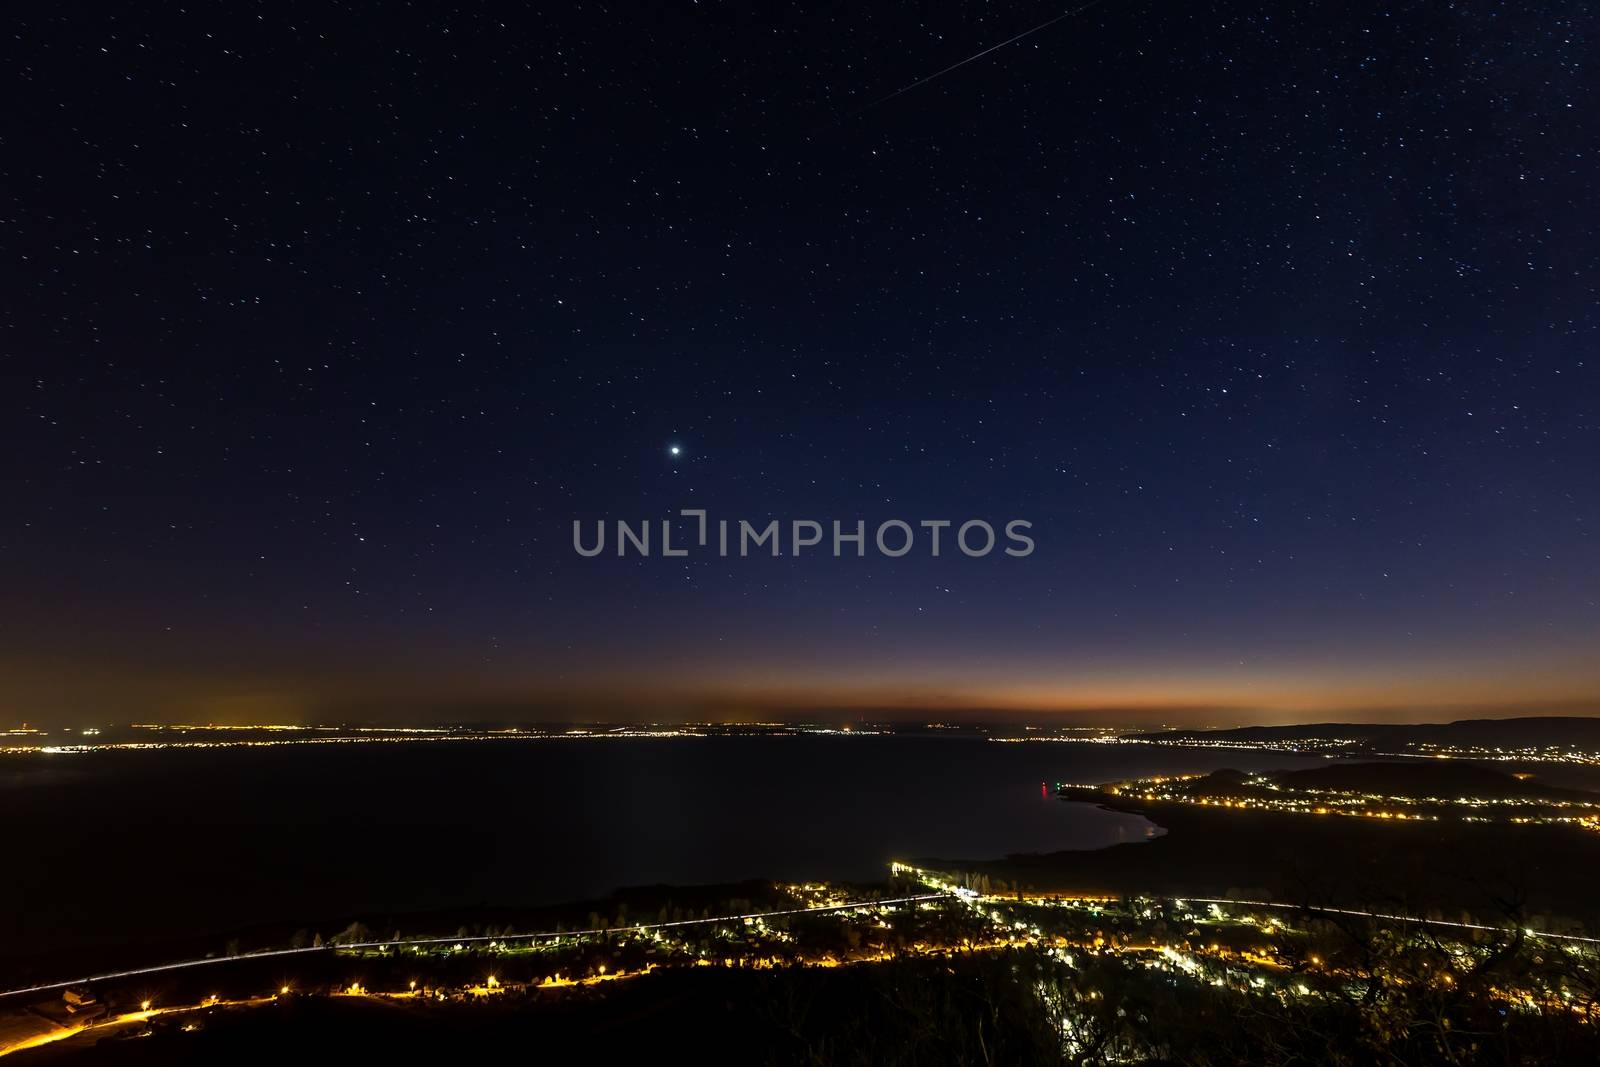 Starry sky at night over the lake Balaton in Hungary